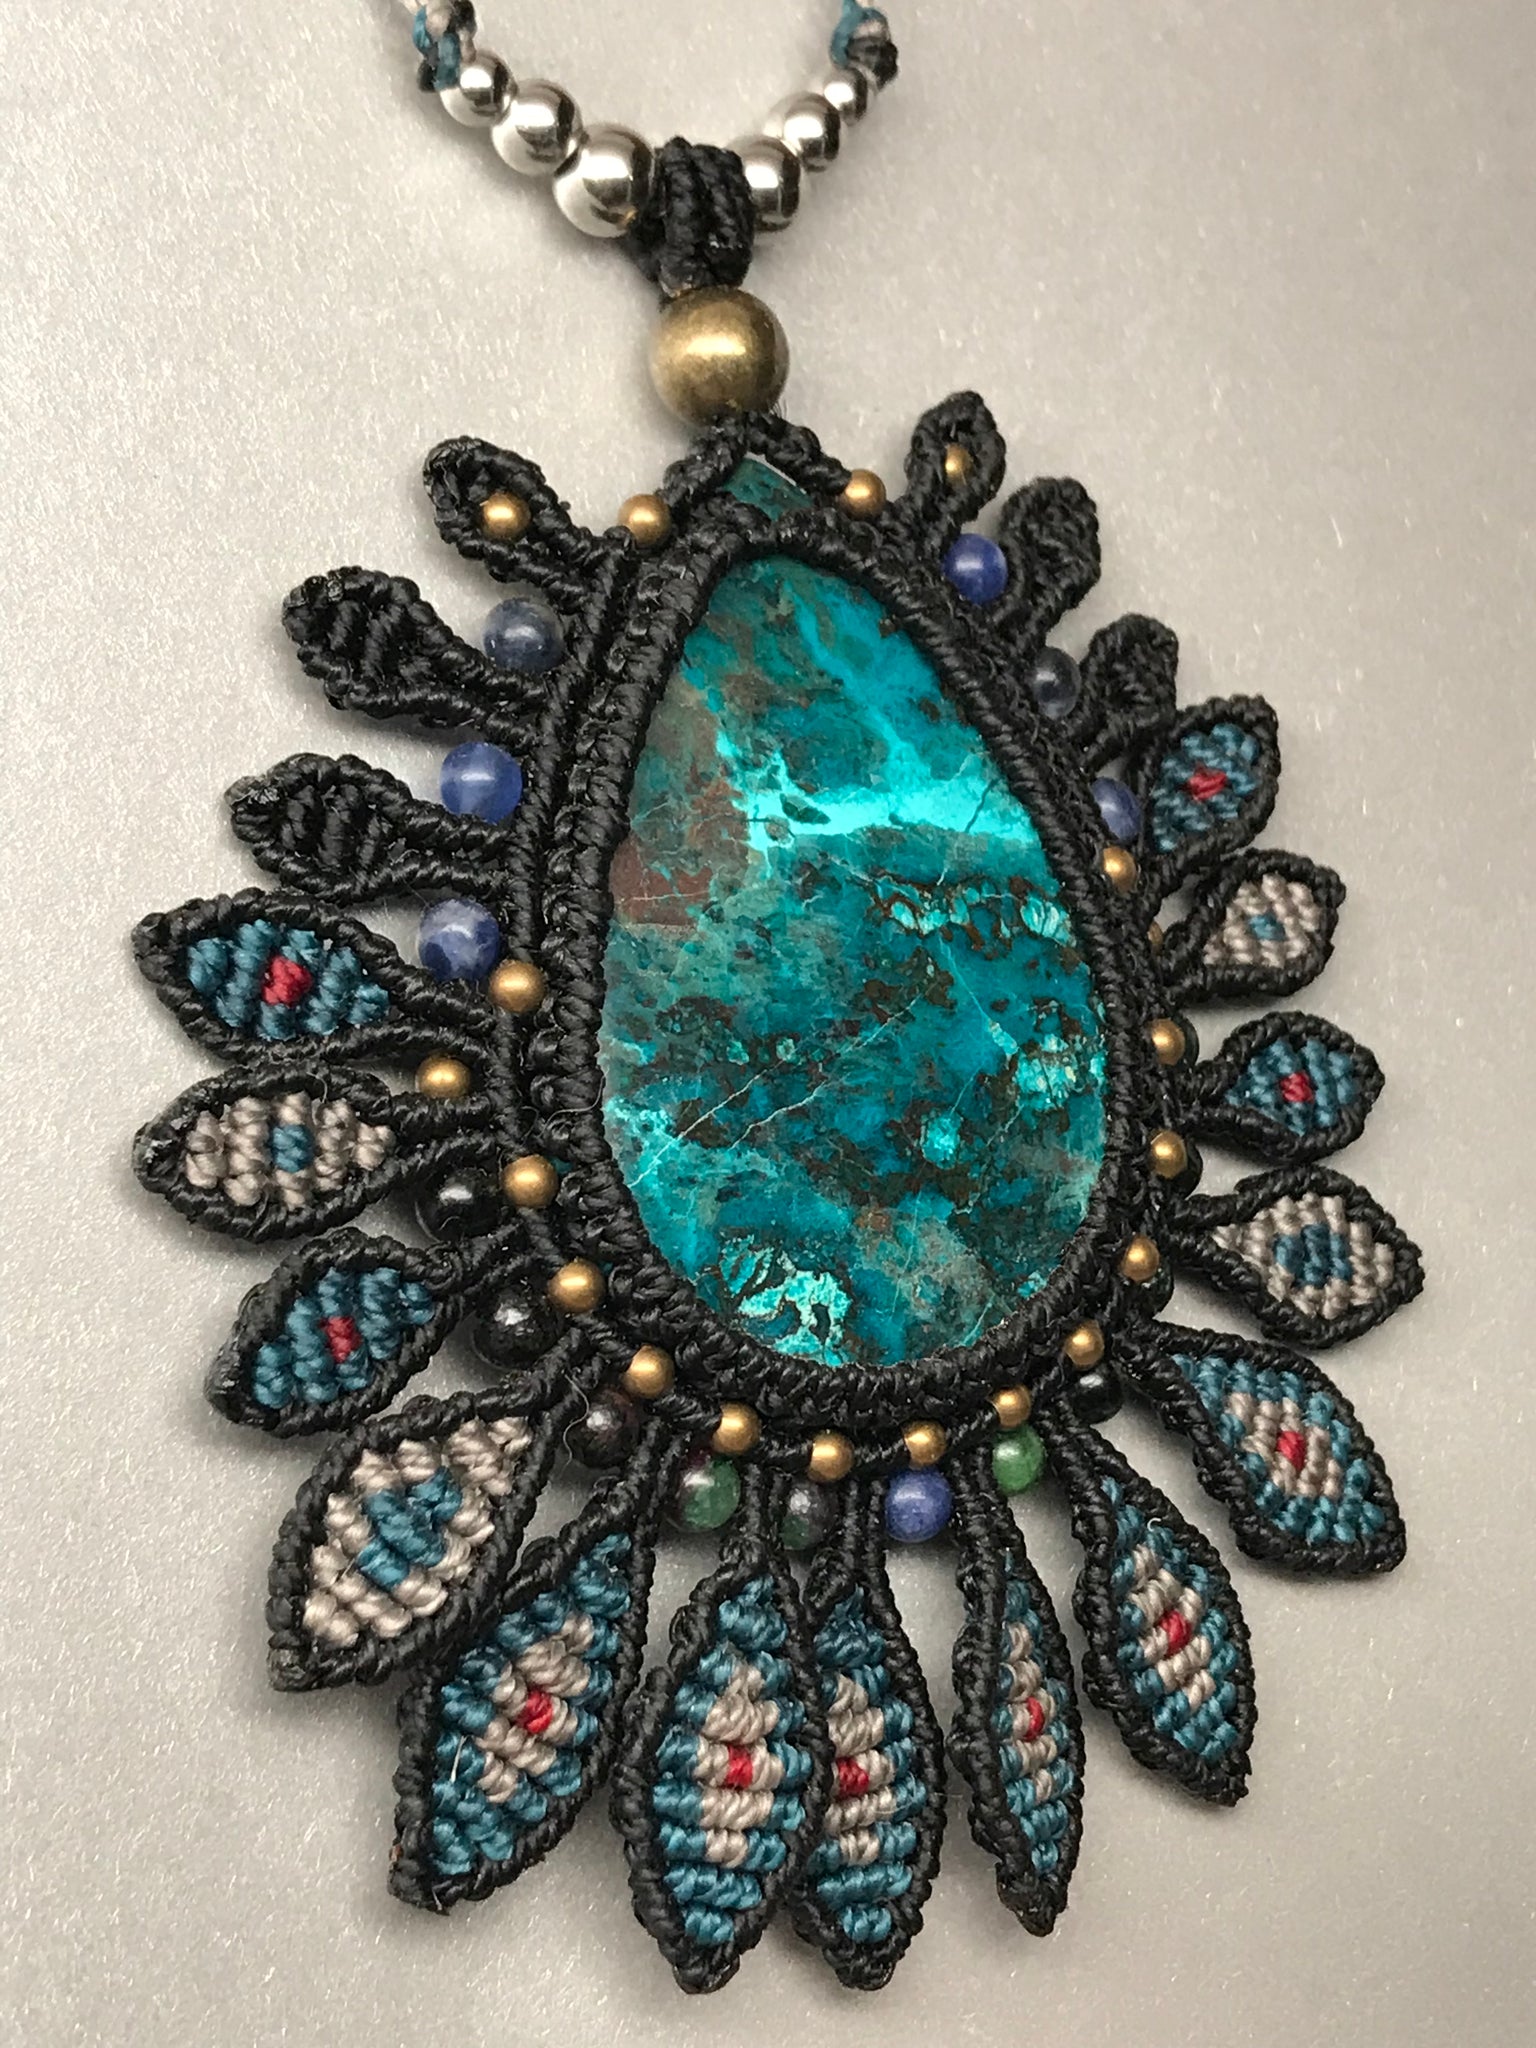 South American Tribal inspired Chrysocolla peacock pendant